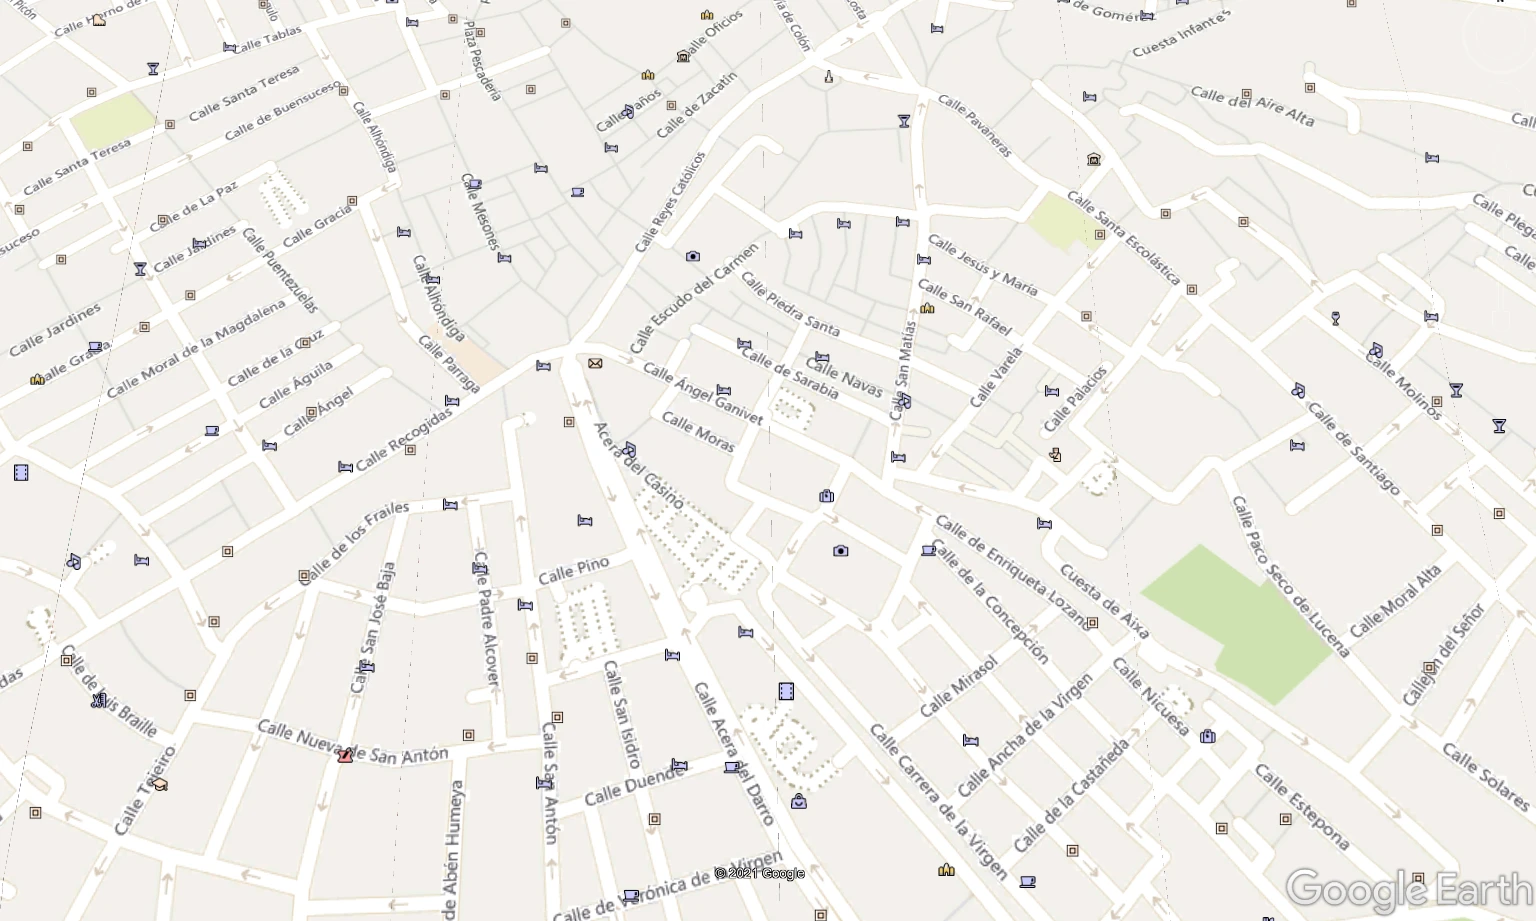 Bing maps overlay on Google Earth